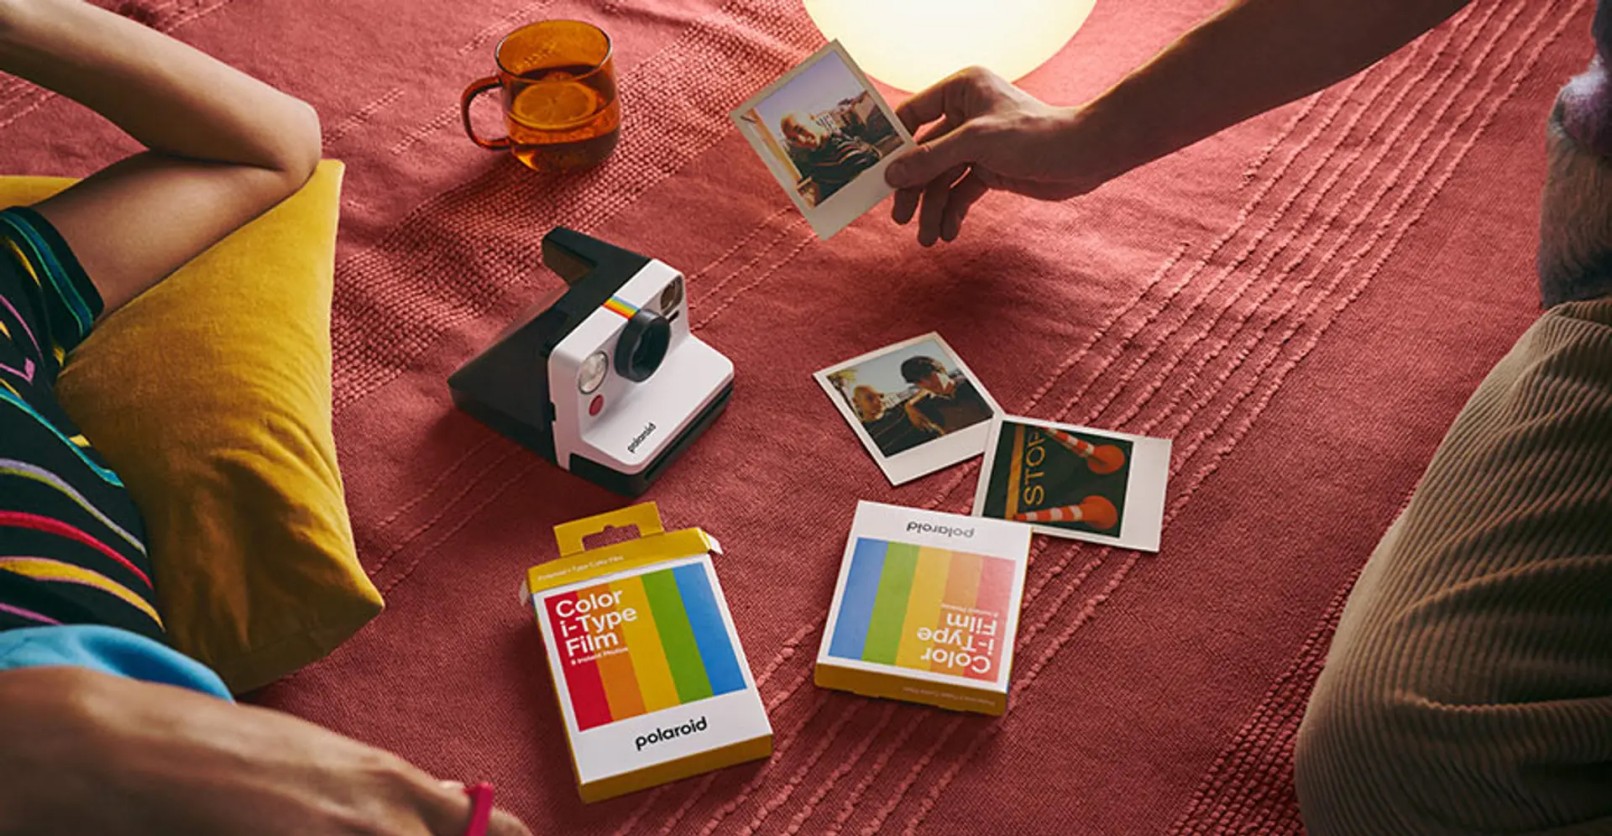 Polaroid Color i-Type Instant Film